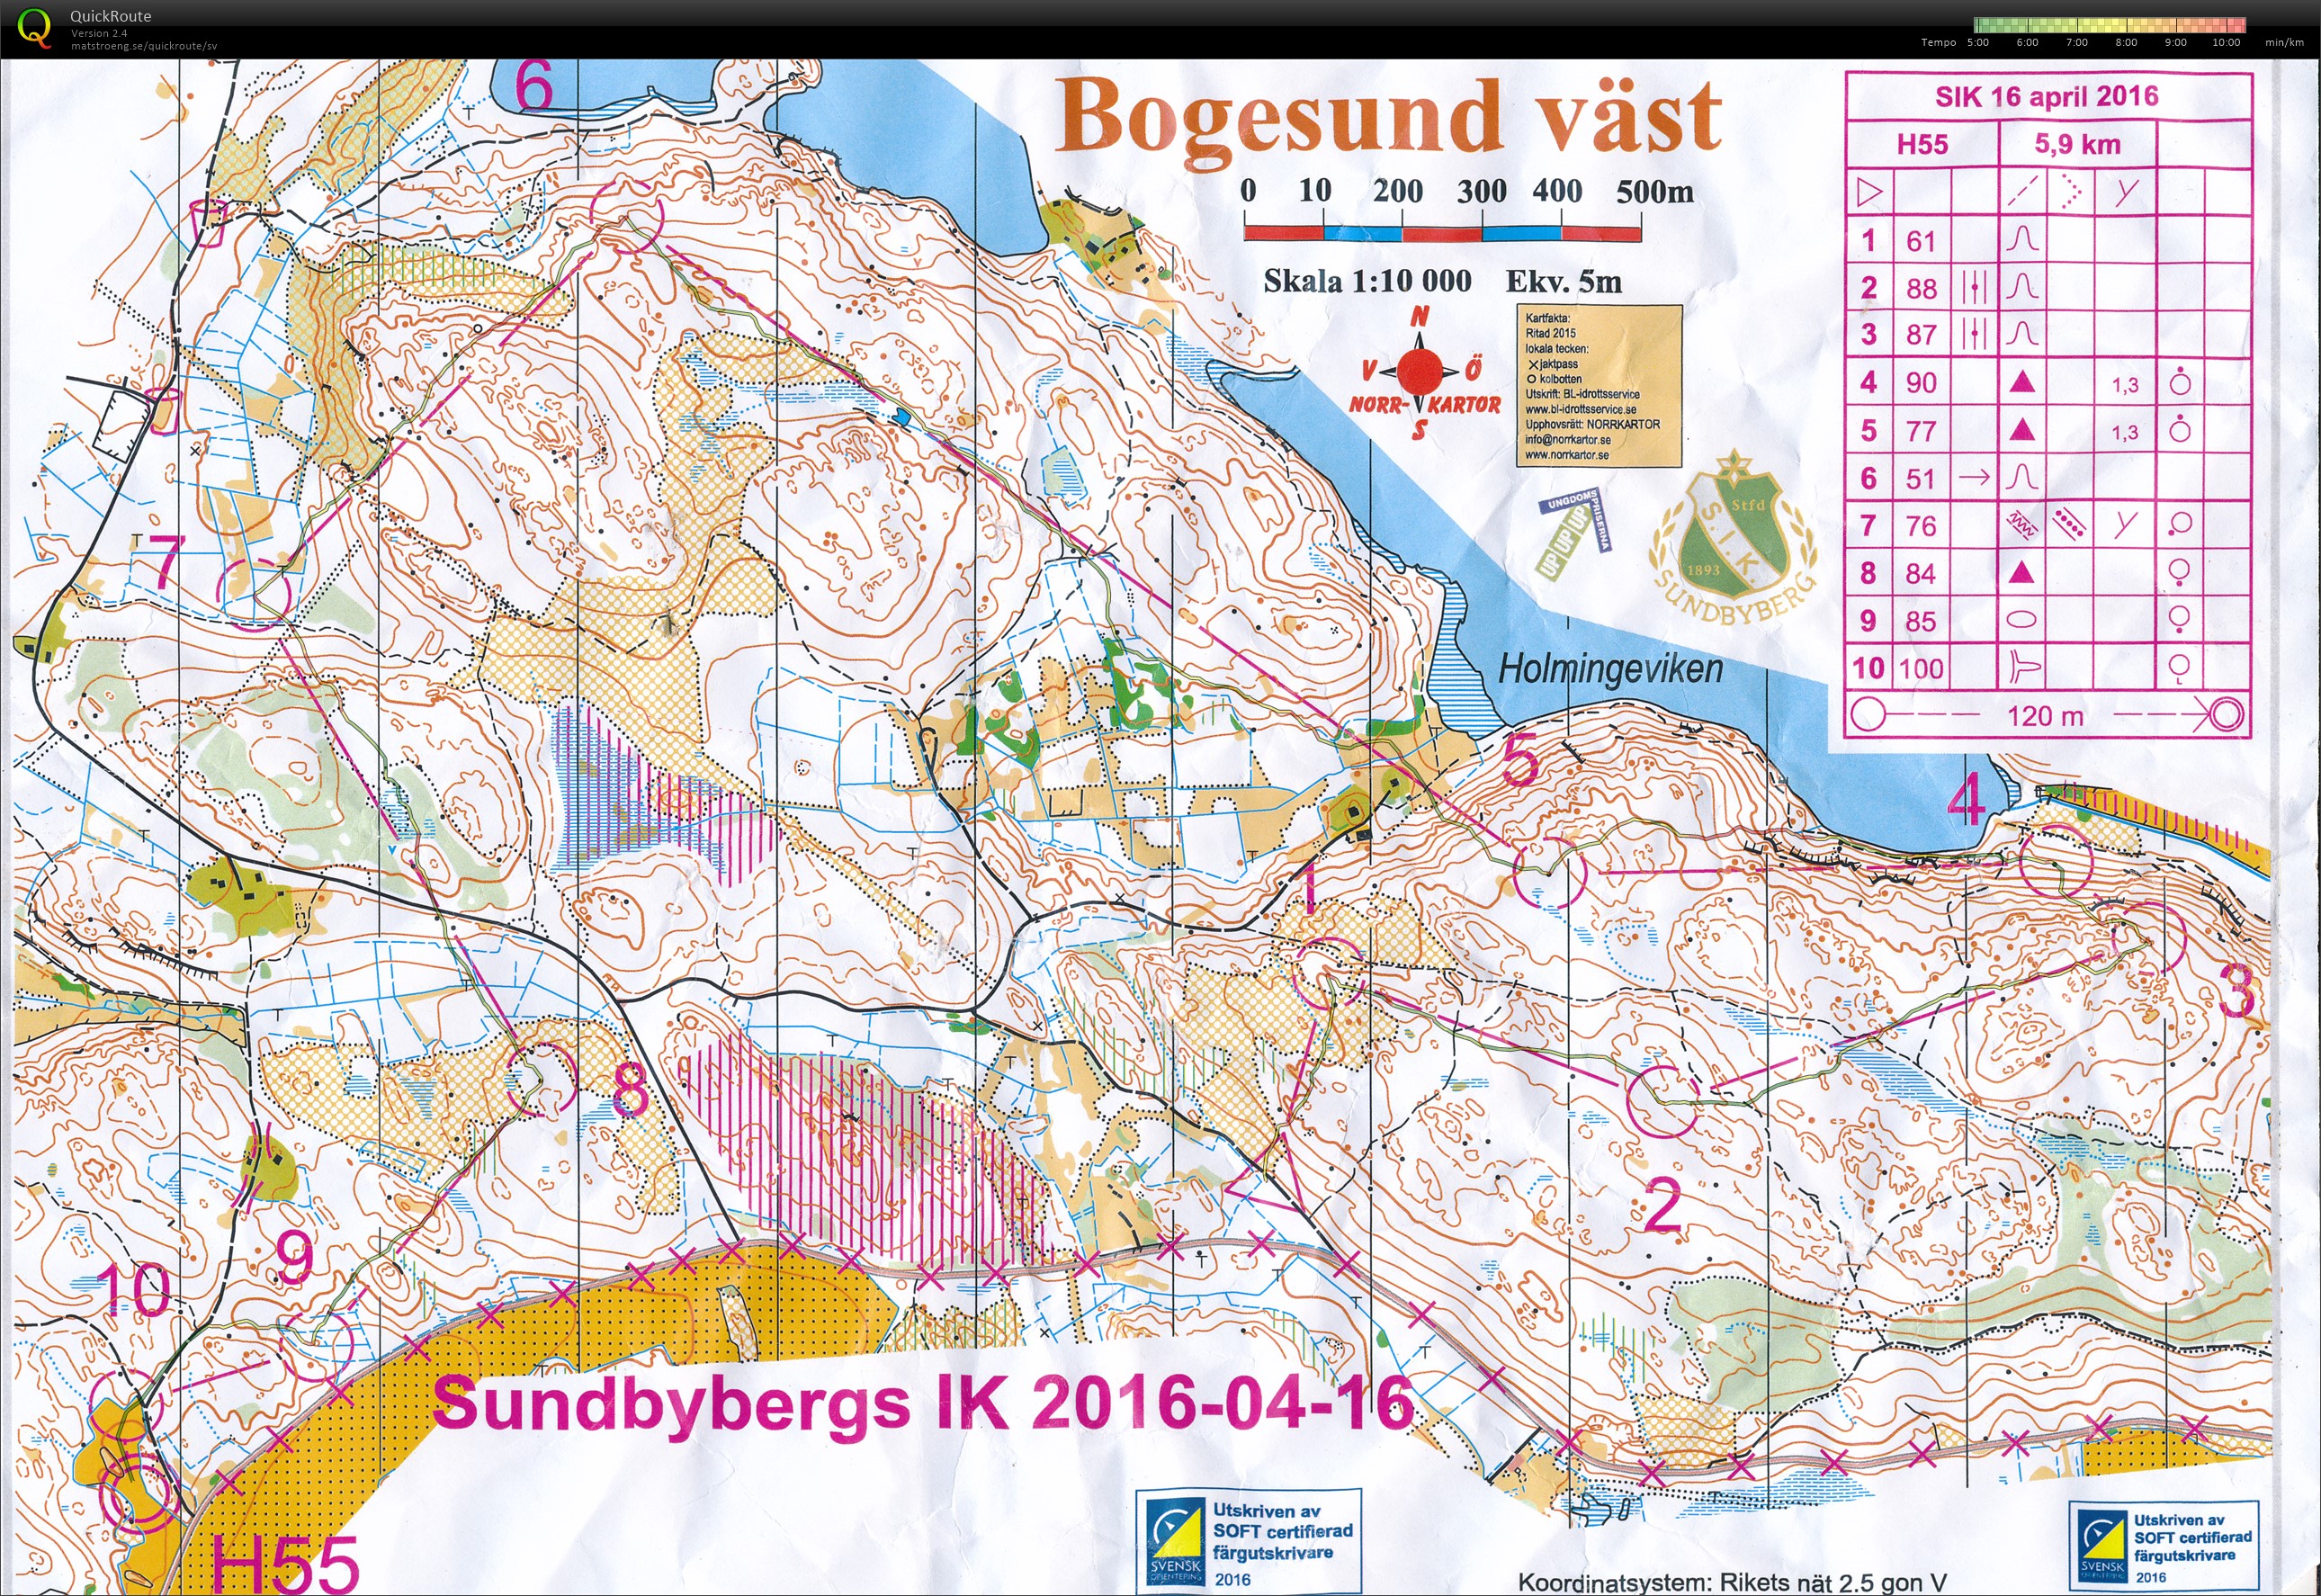 Sundbyberg (16/04/2016)